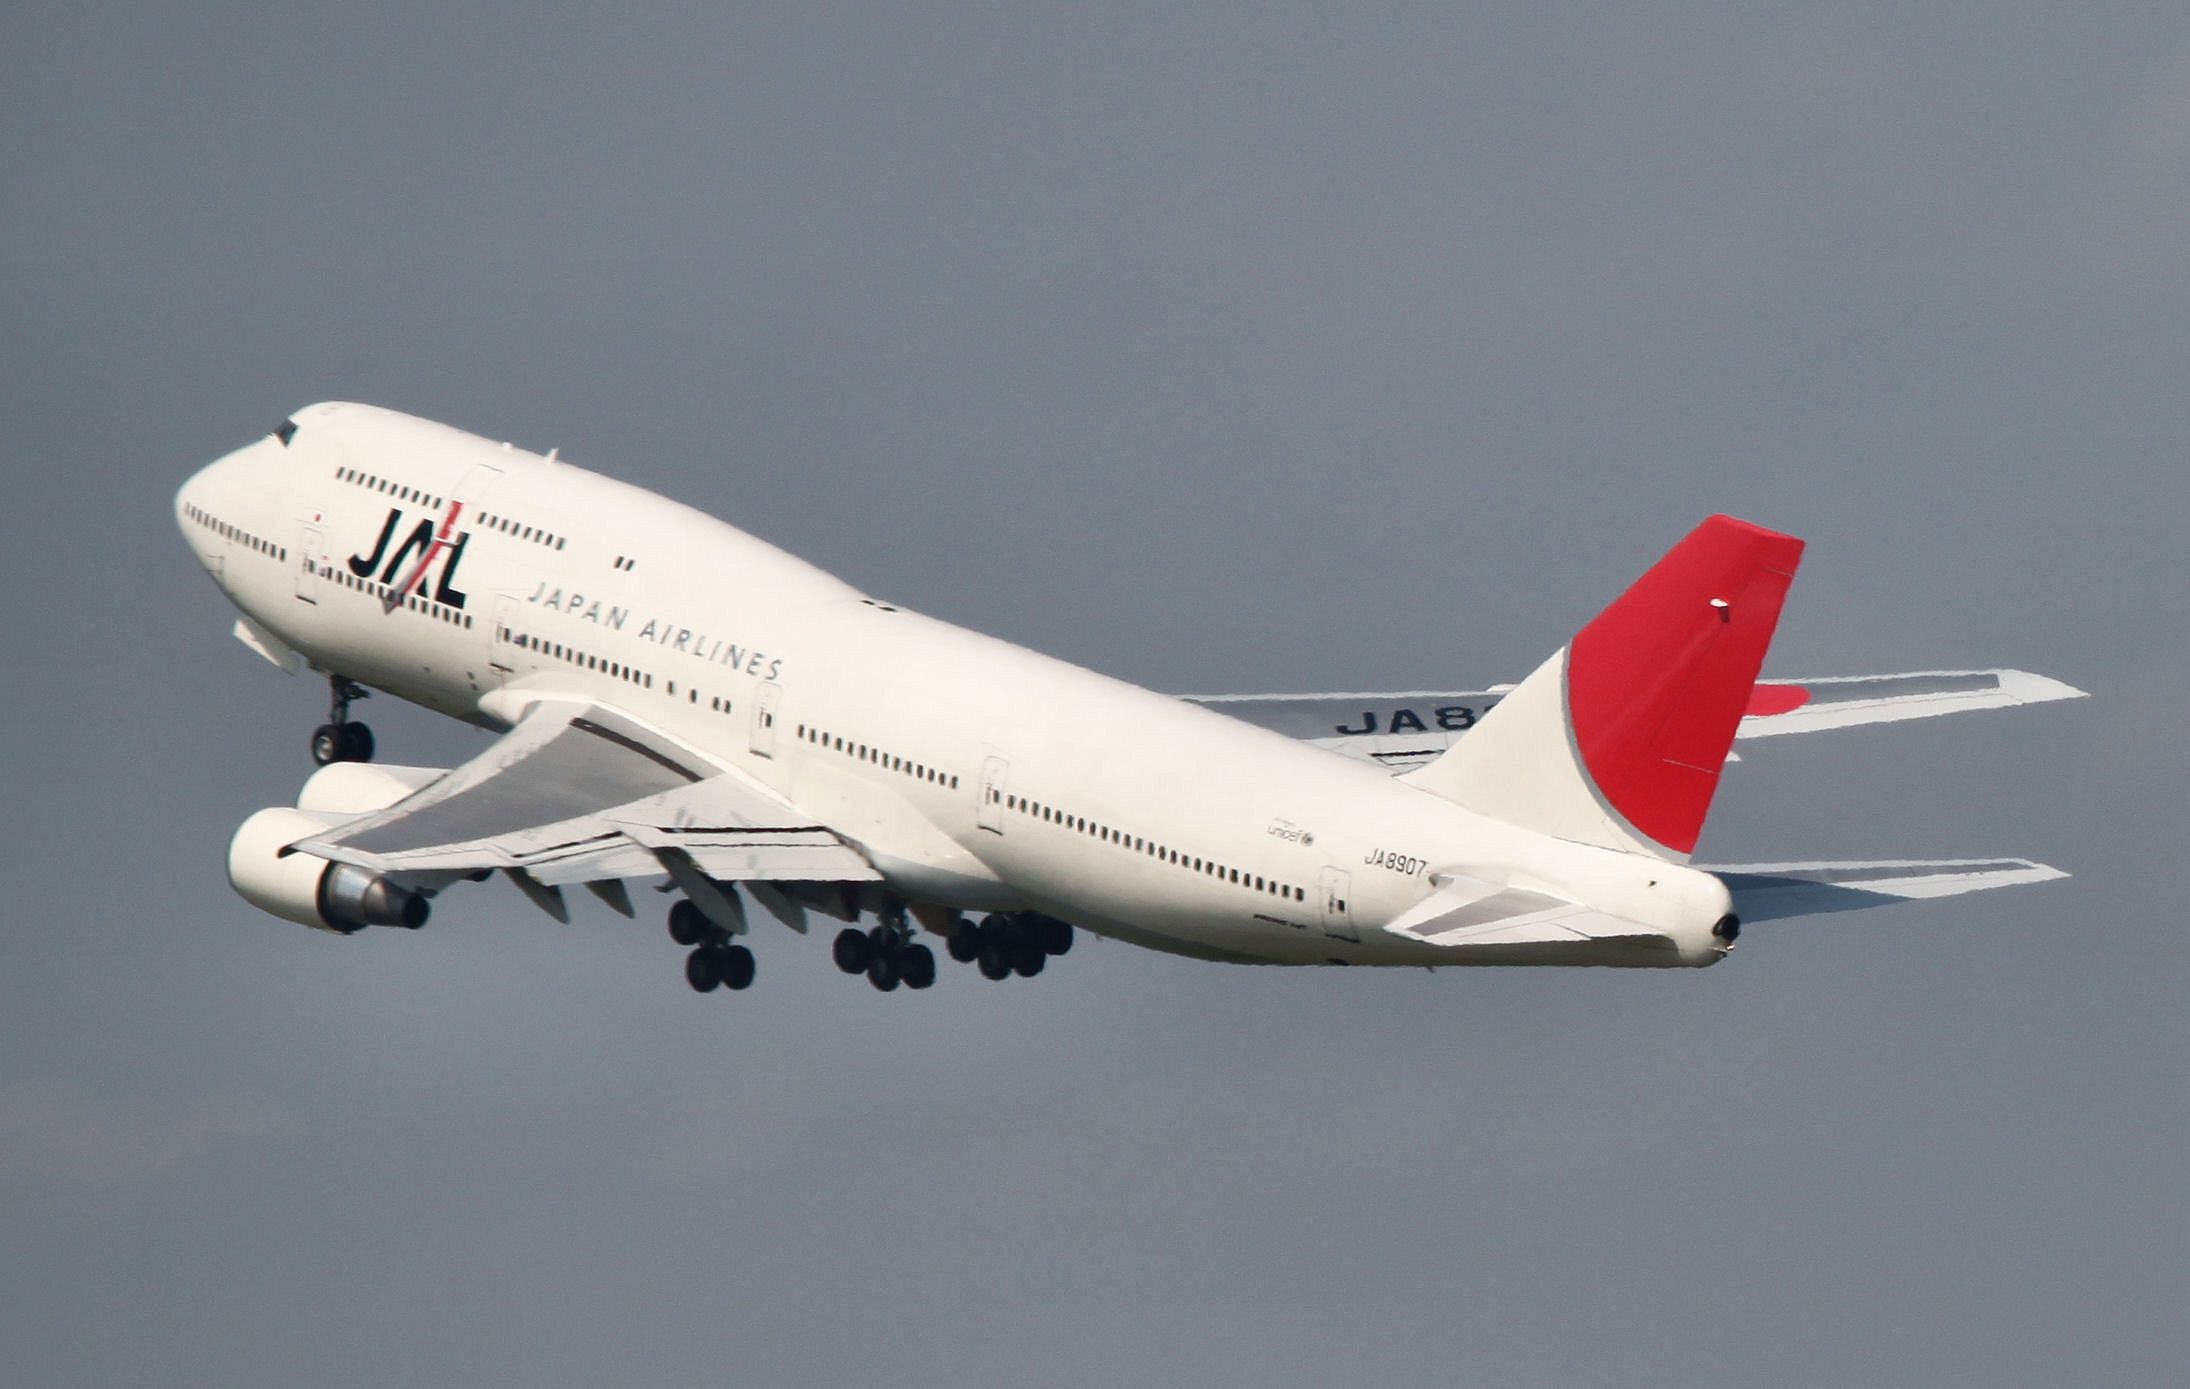 BOEING 747-400 (domestic, no winglets) | SKYbrary Aviation Safety